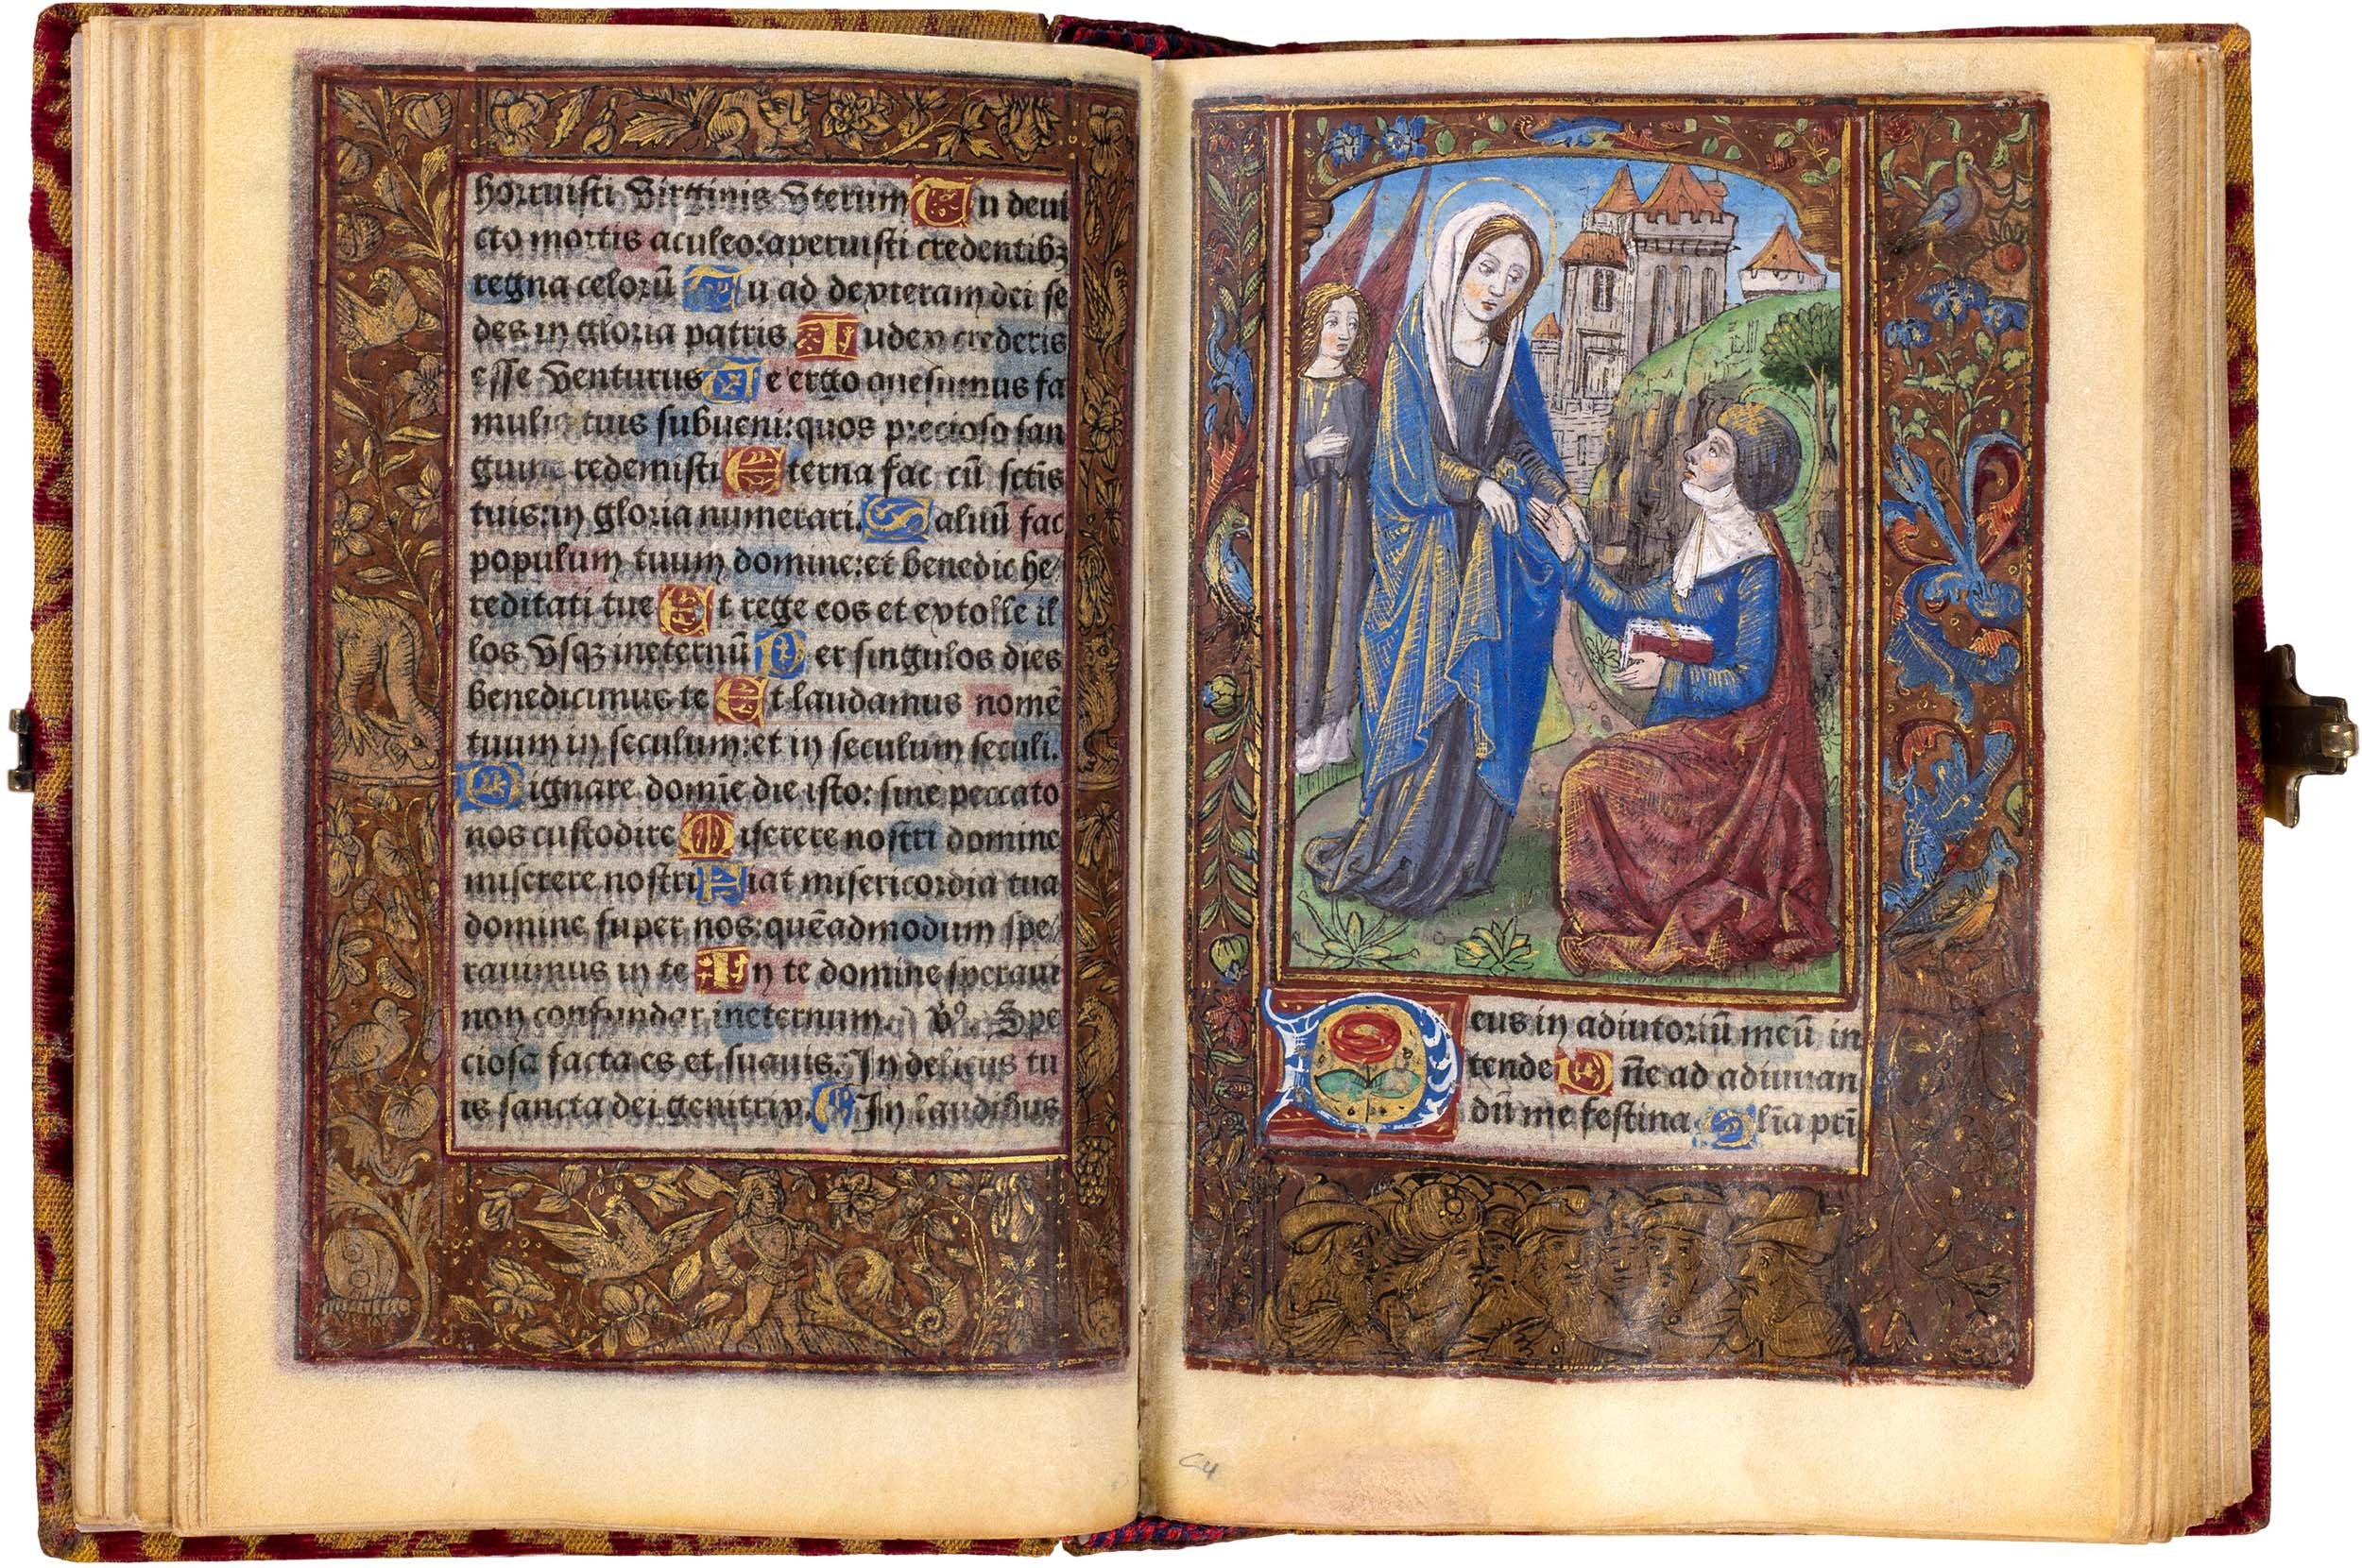 Horae-bmv-1488-gamma-dupre-printed-book-of-hours-danse-macabre-camaieu-dor-illuminated-vellum-copy-38.jpg